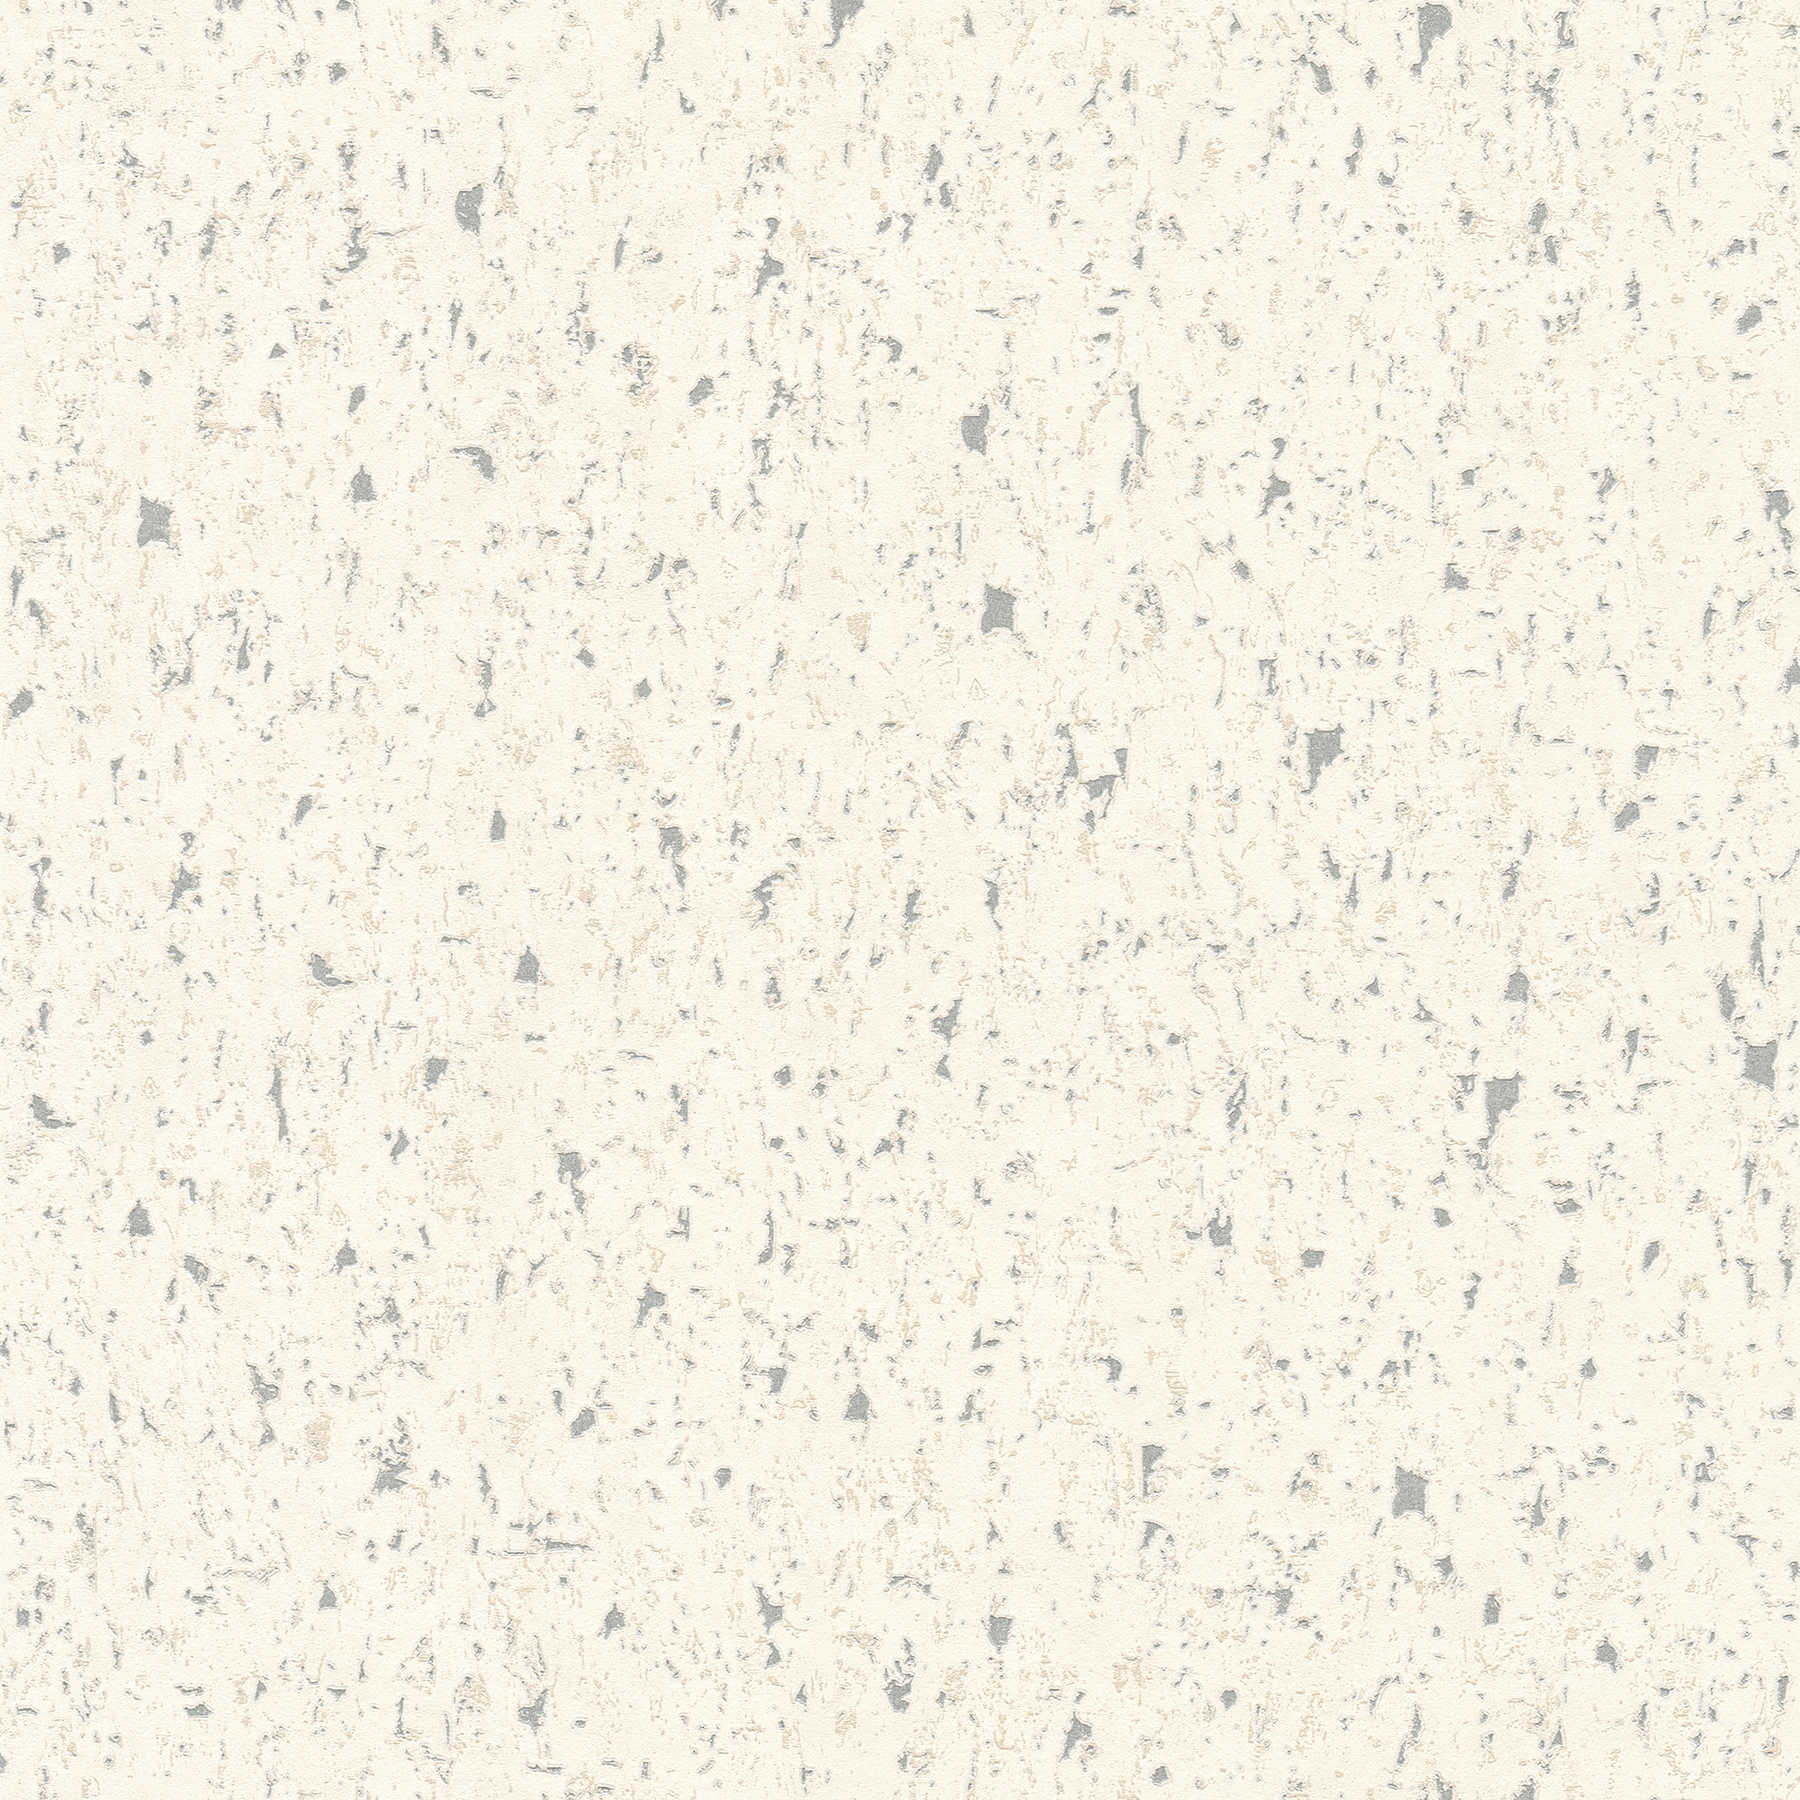 Non-woven wallpaper cork look with metallic effect - white, silver
